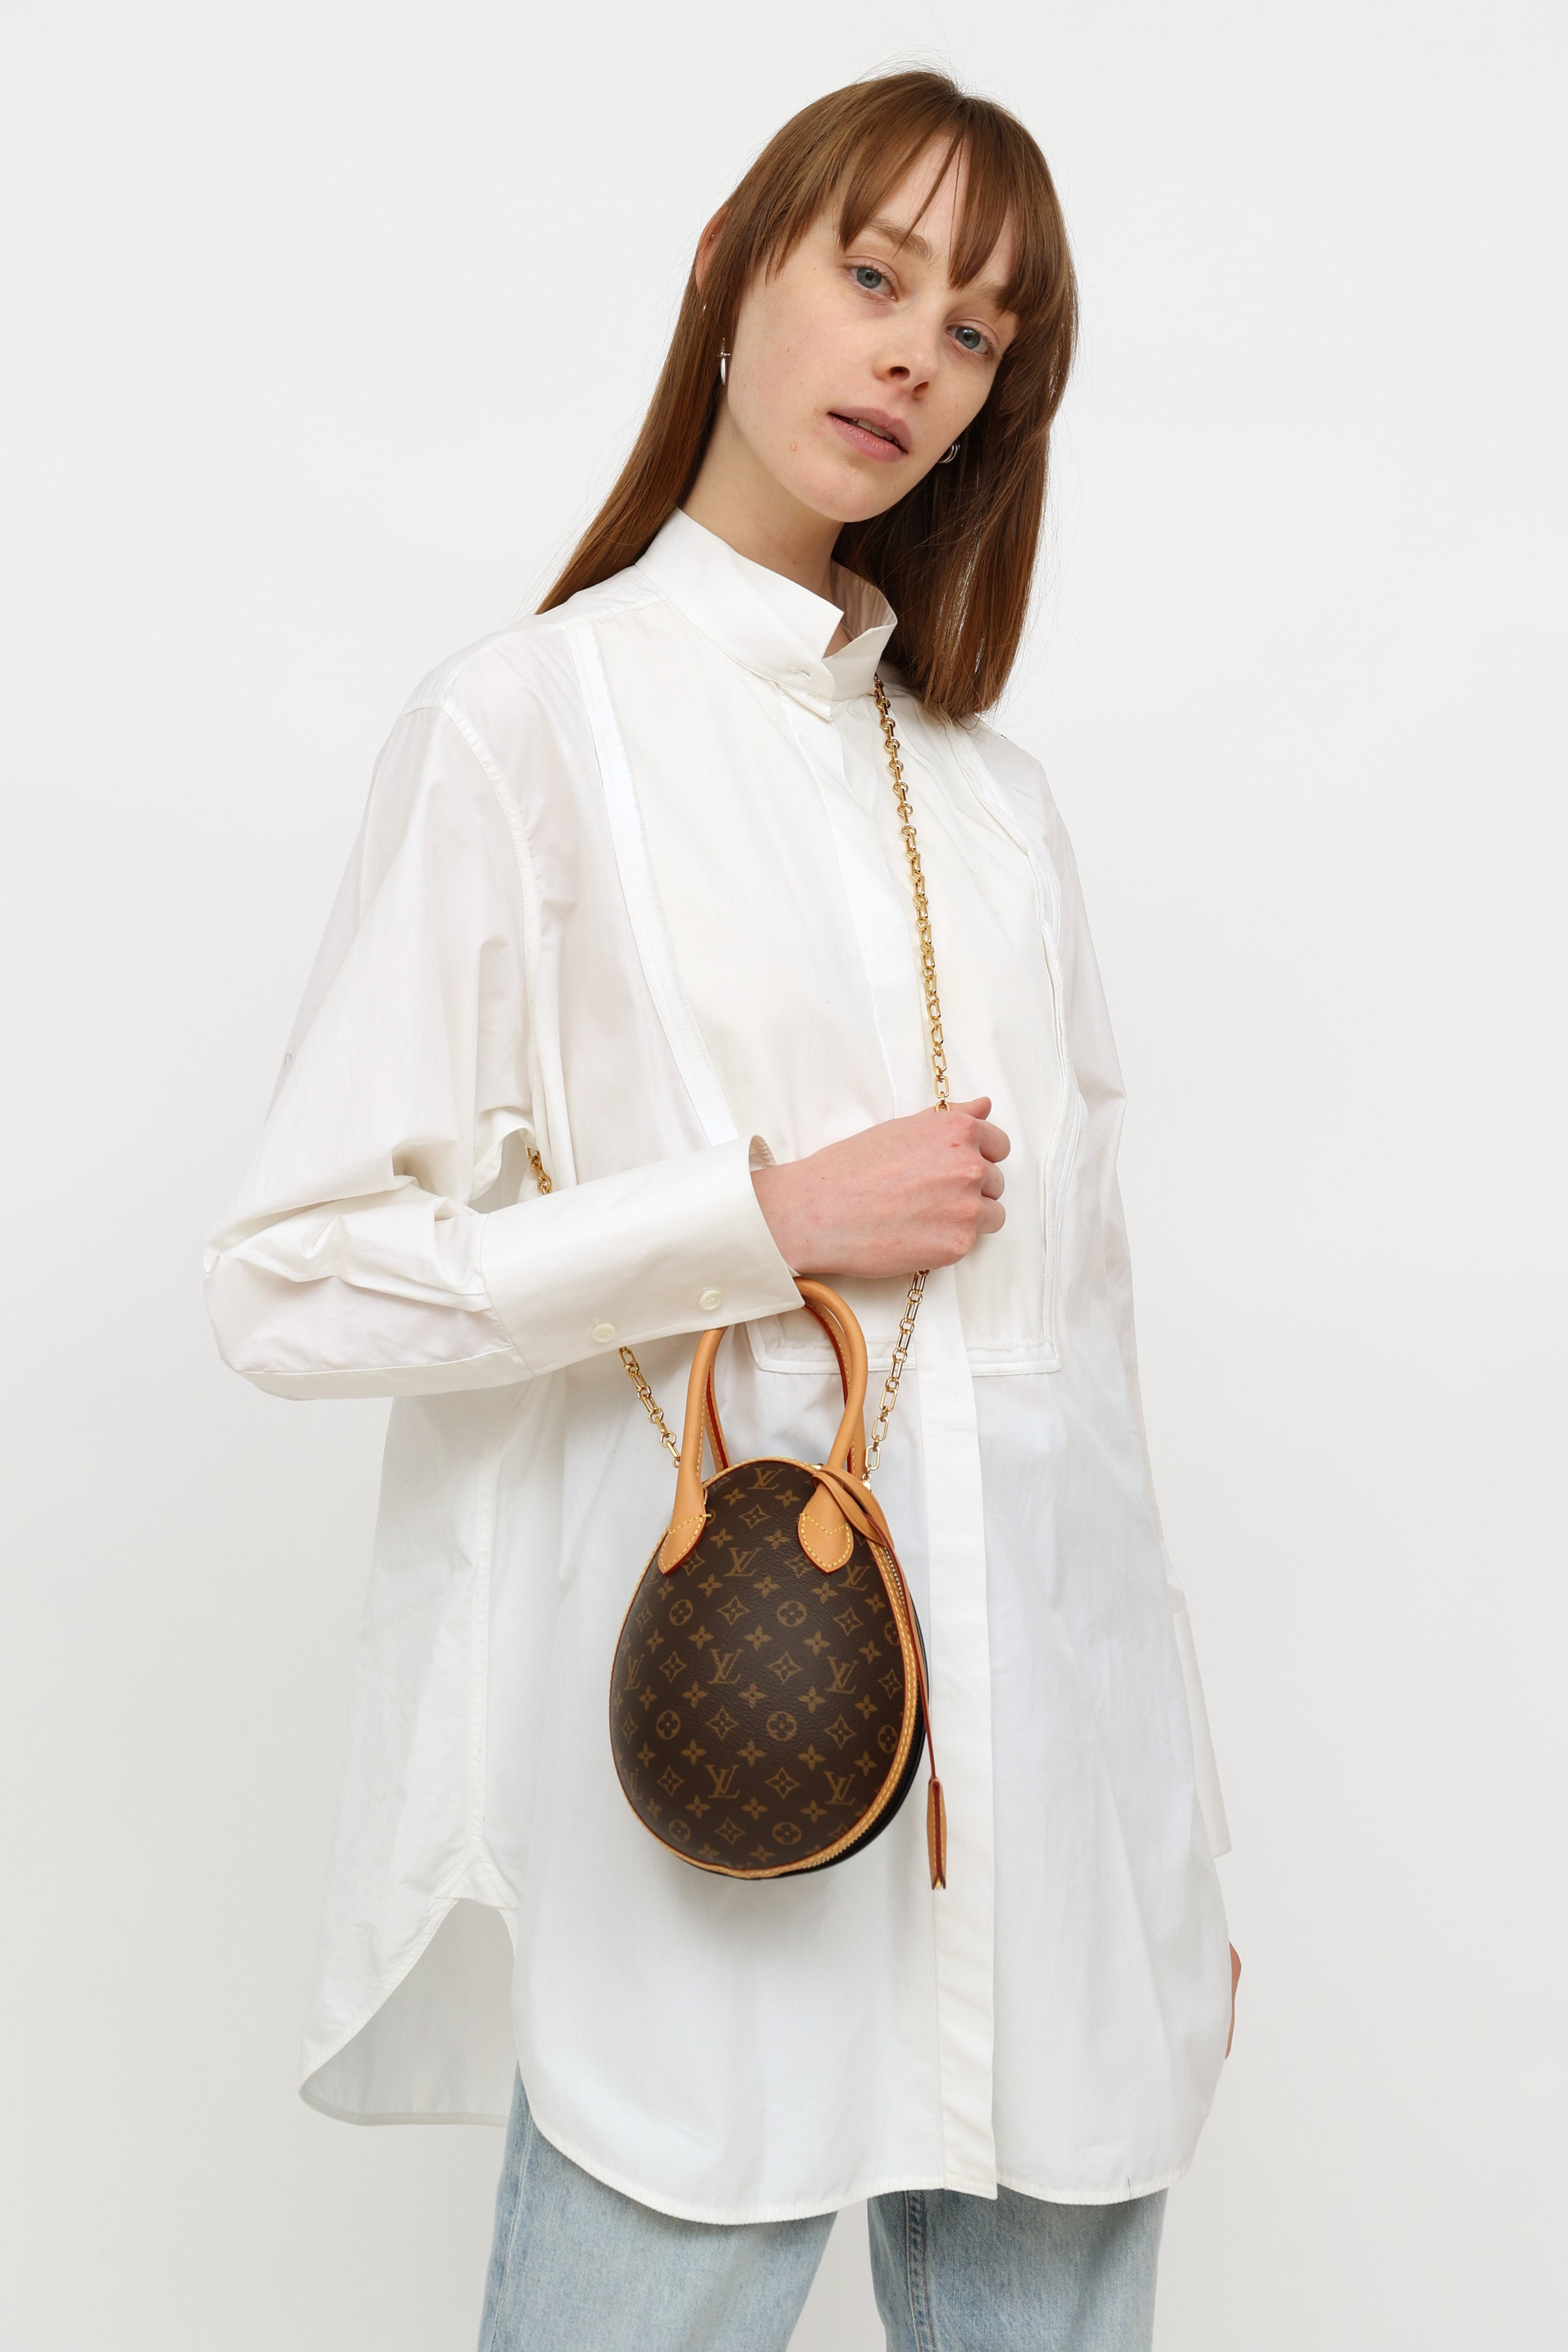 Louis Vuitton 2019 Monogram LV Egg Bag w/ Tags - Black Crossbody